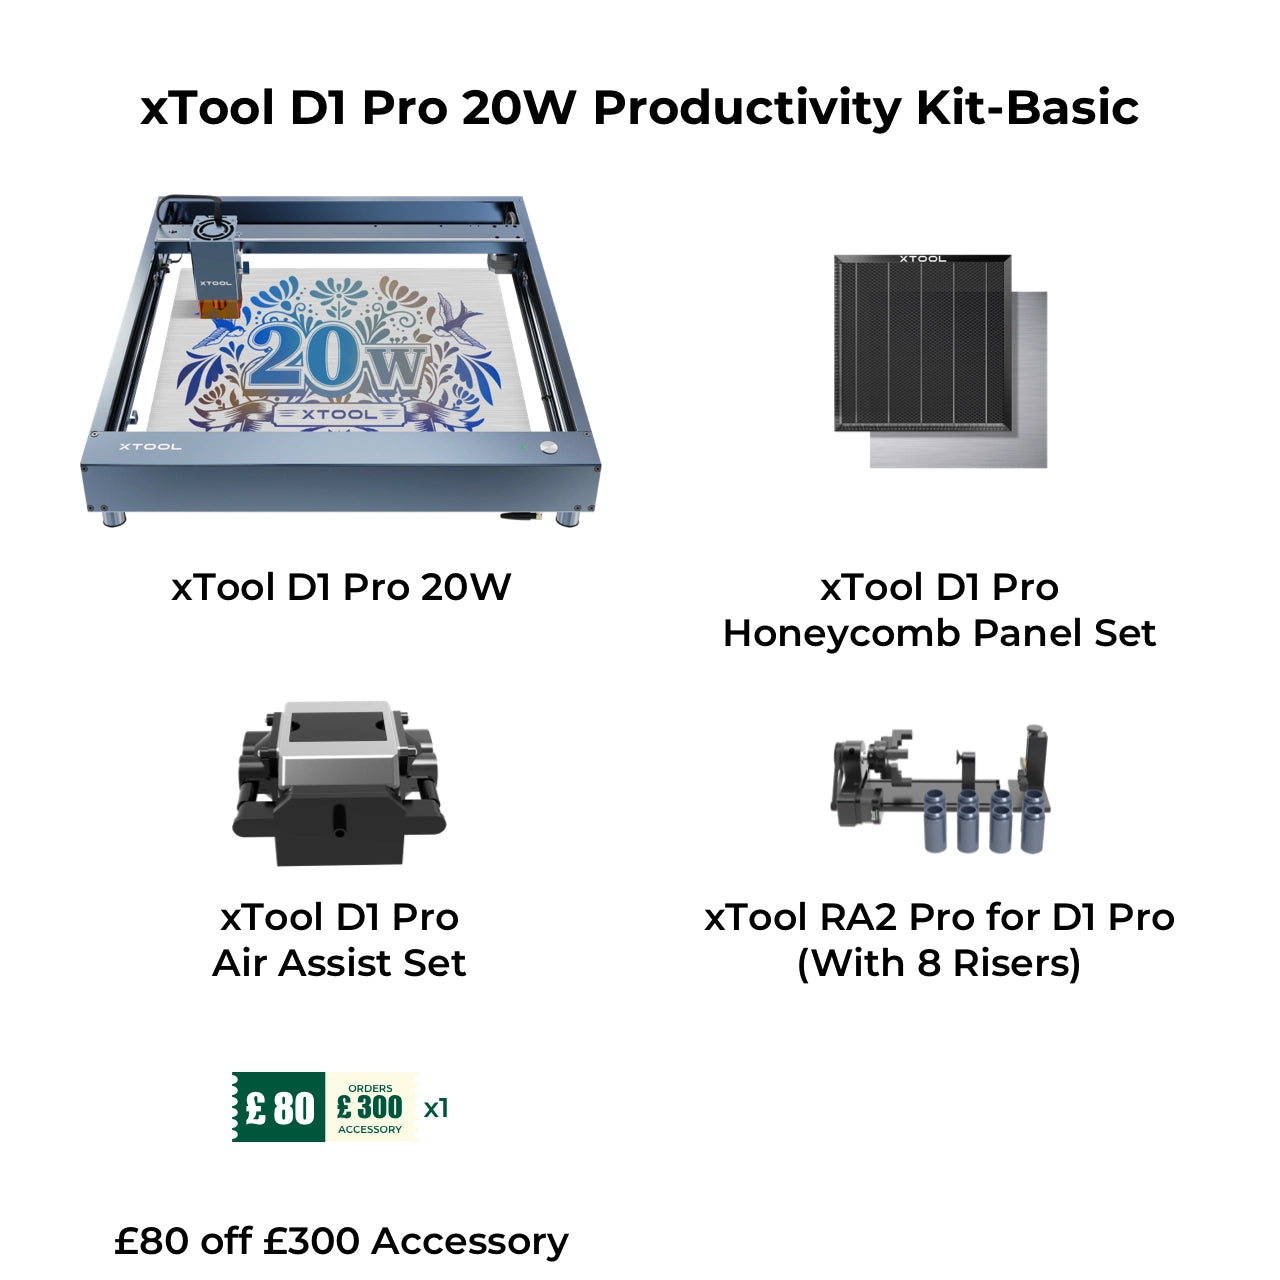 xTool D1 Pro 20W Productivity Kit-Basic